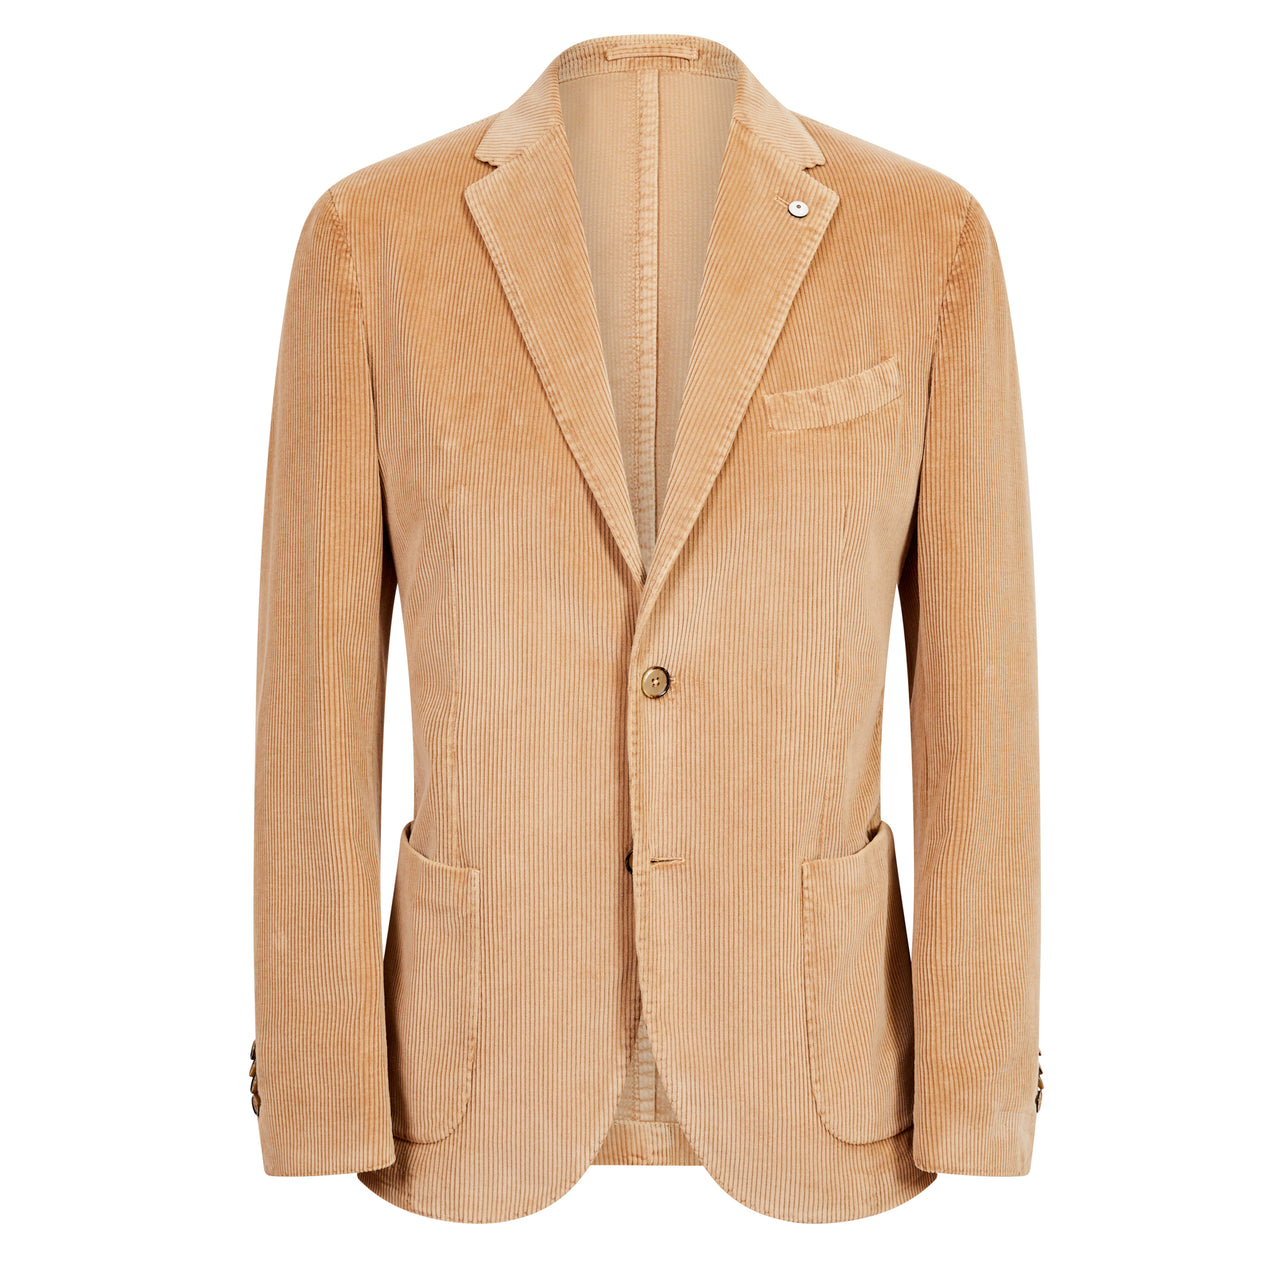 L.B.M 1911 Cotton Garment Dyed Jacket BEIGE REG